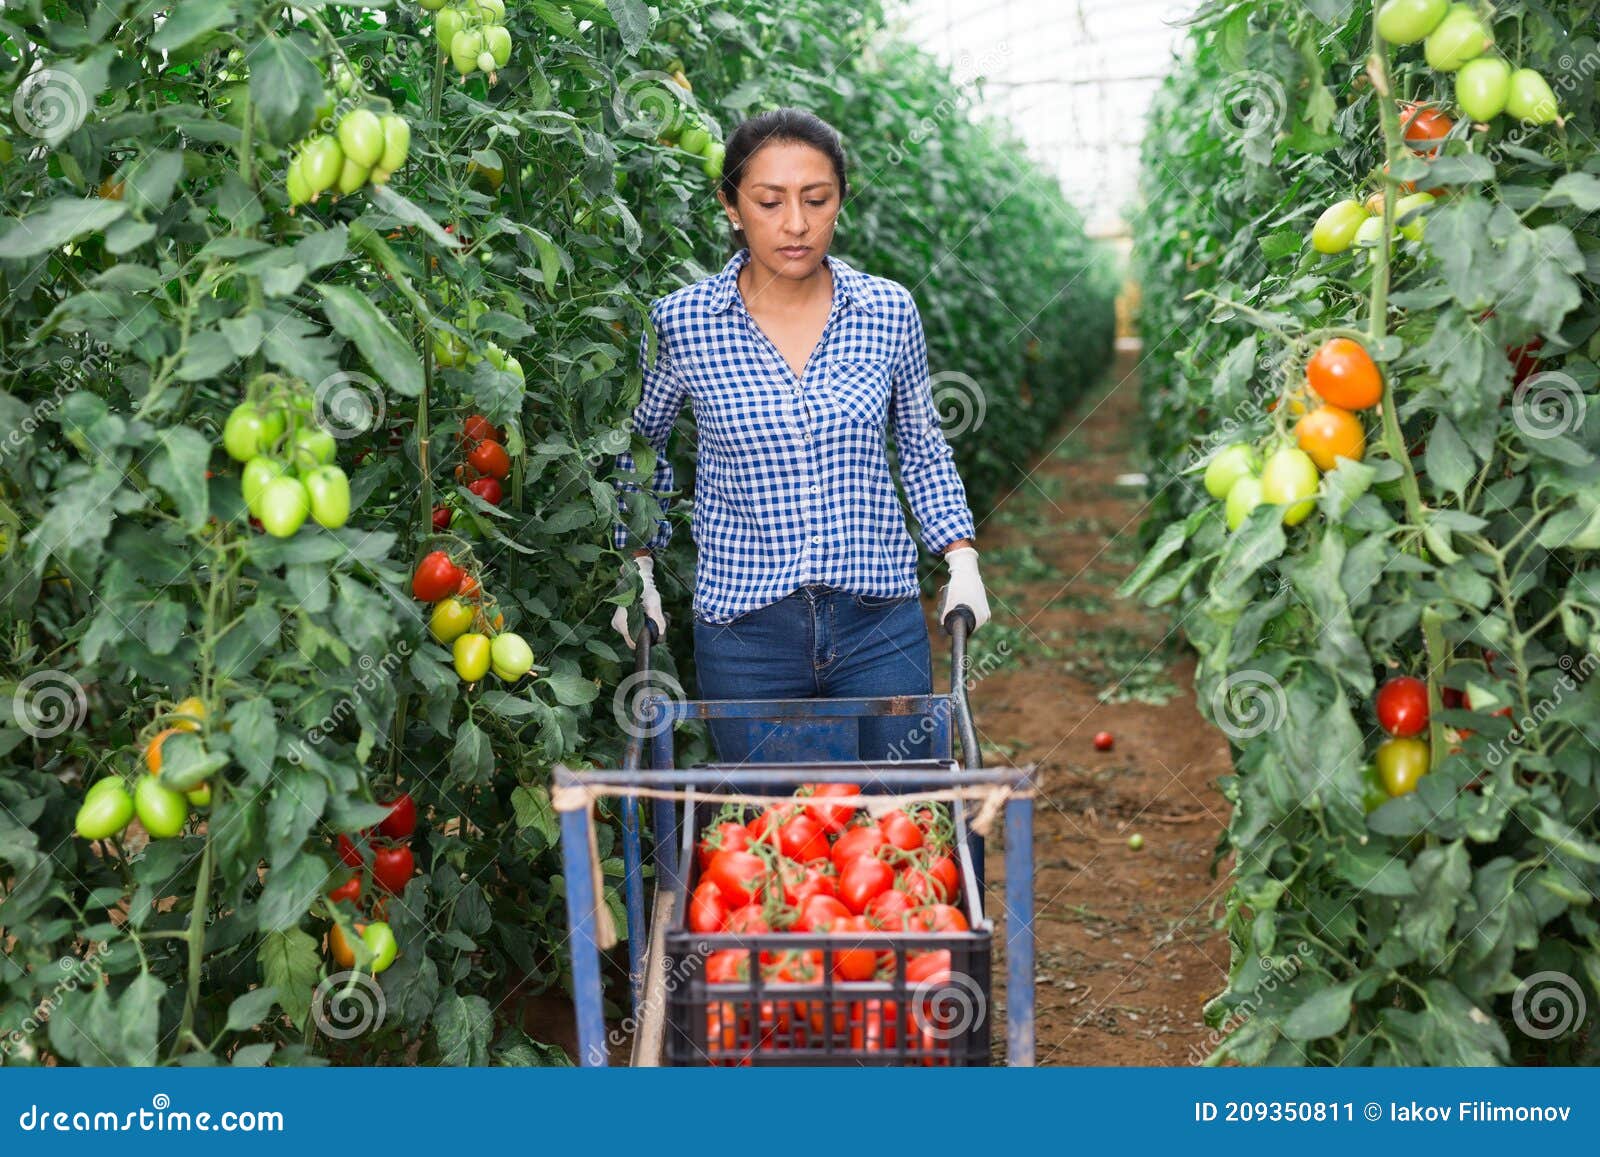 female latino farmer puts red tomatoes in plastic box for sale